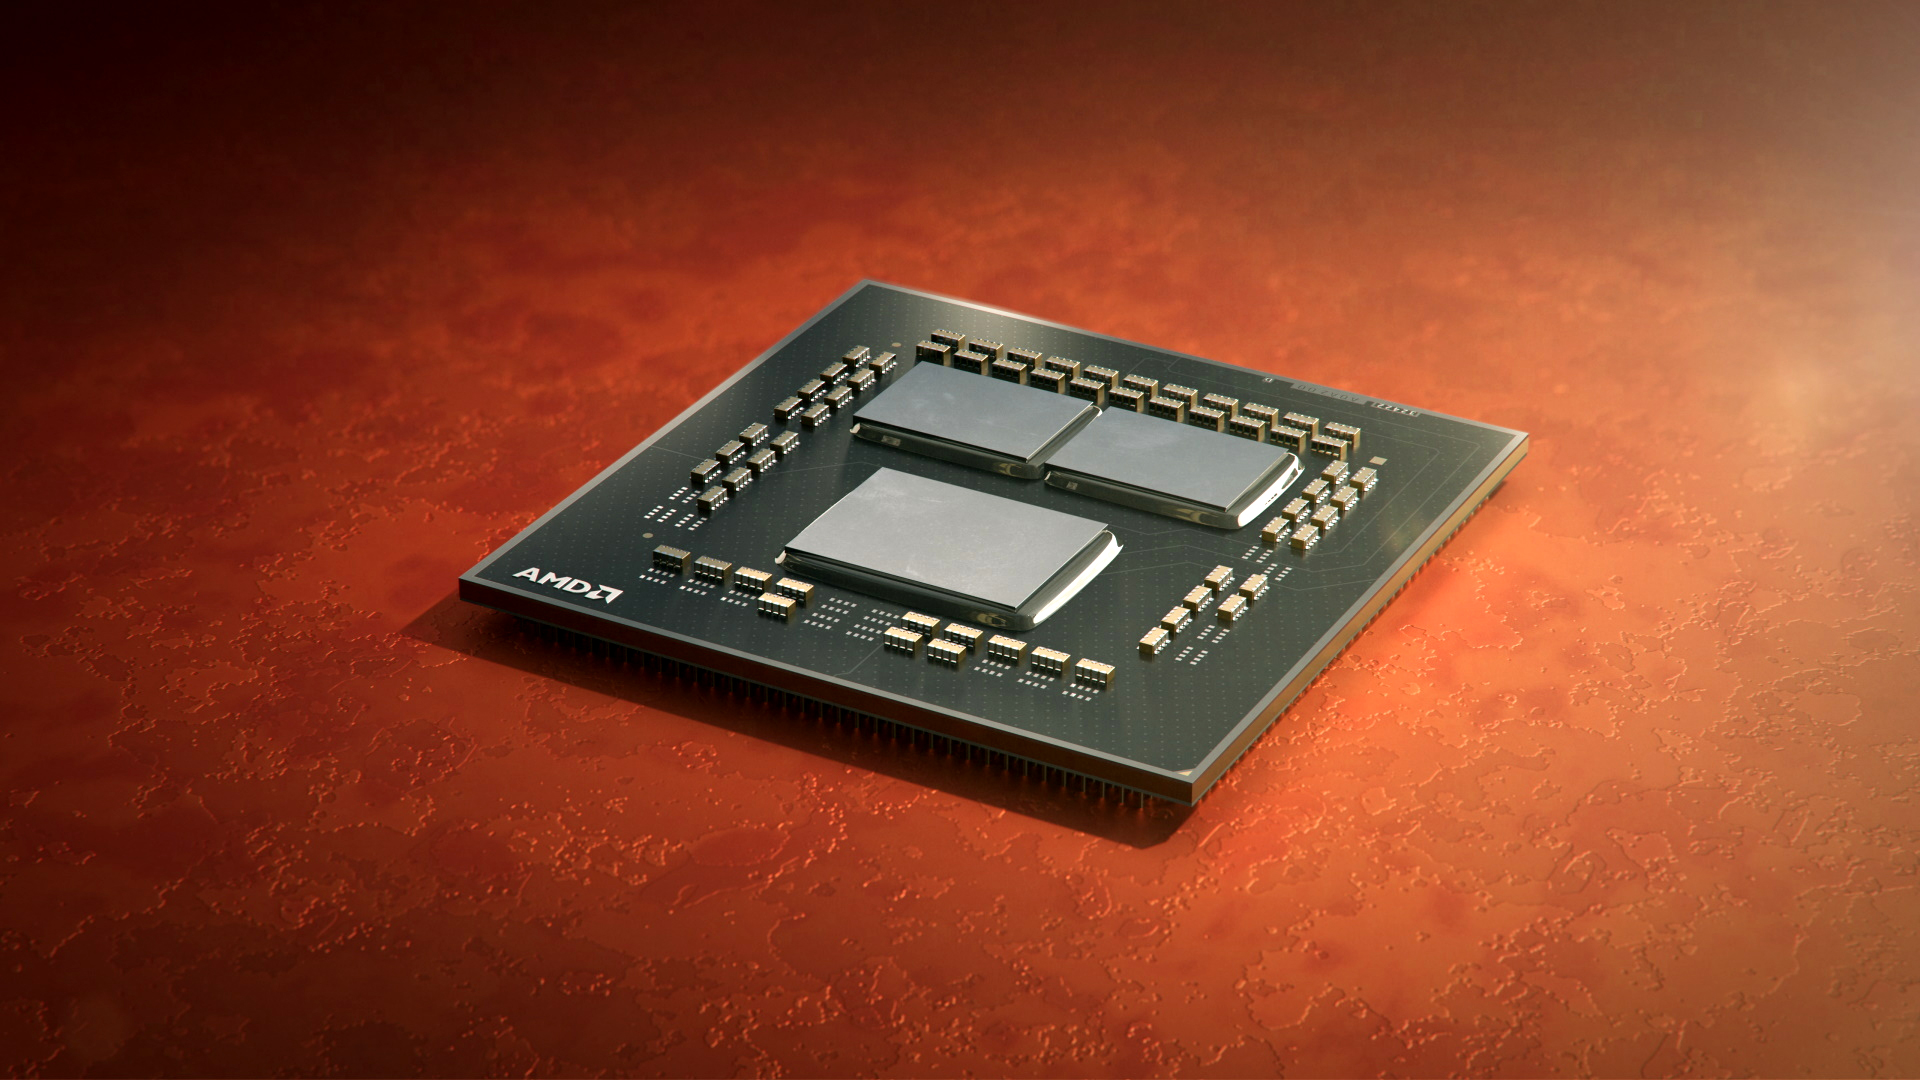 AMD Ryzen 5000 Review: The best consumer CPU we've ever seen